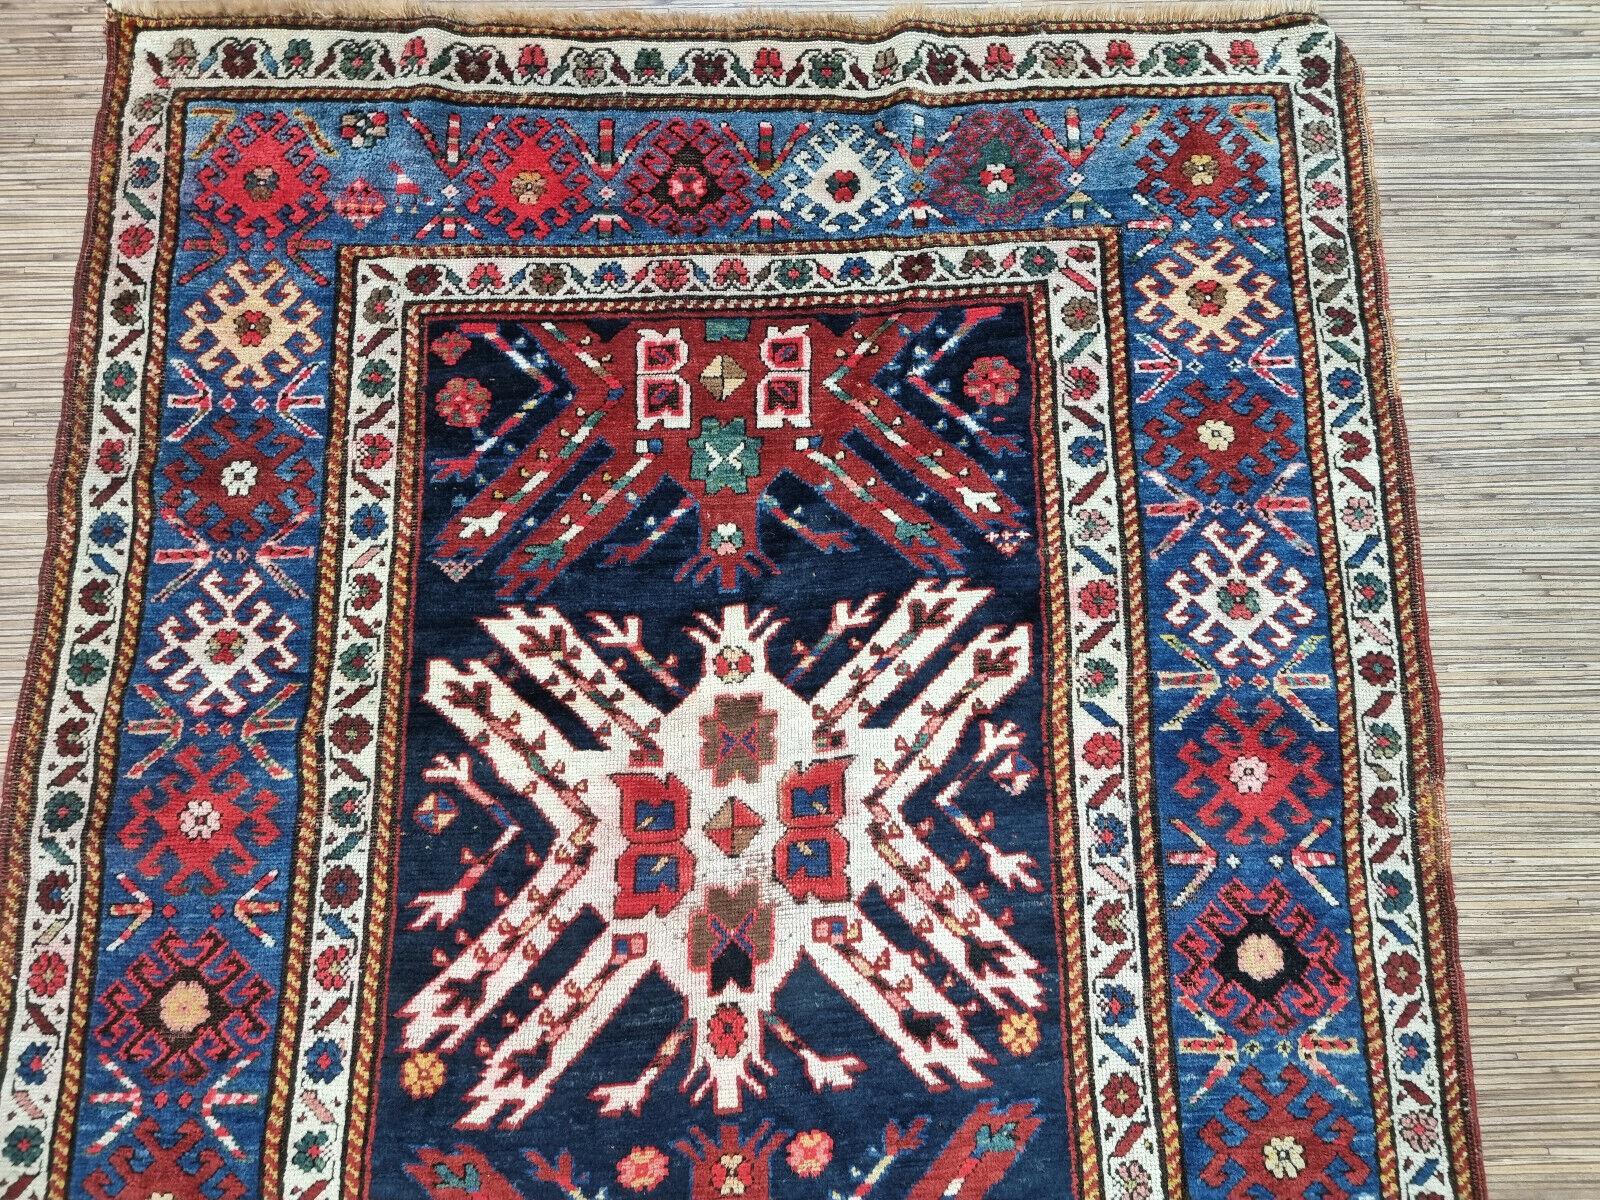 Early 20th Century Handmade Antique Caucasian Kazak Rug 4.1' x 8.9', 1900s - 1D104 For Sale